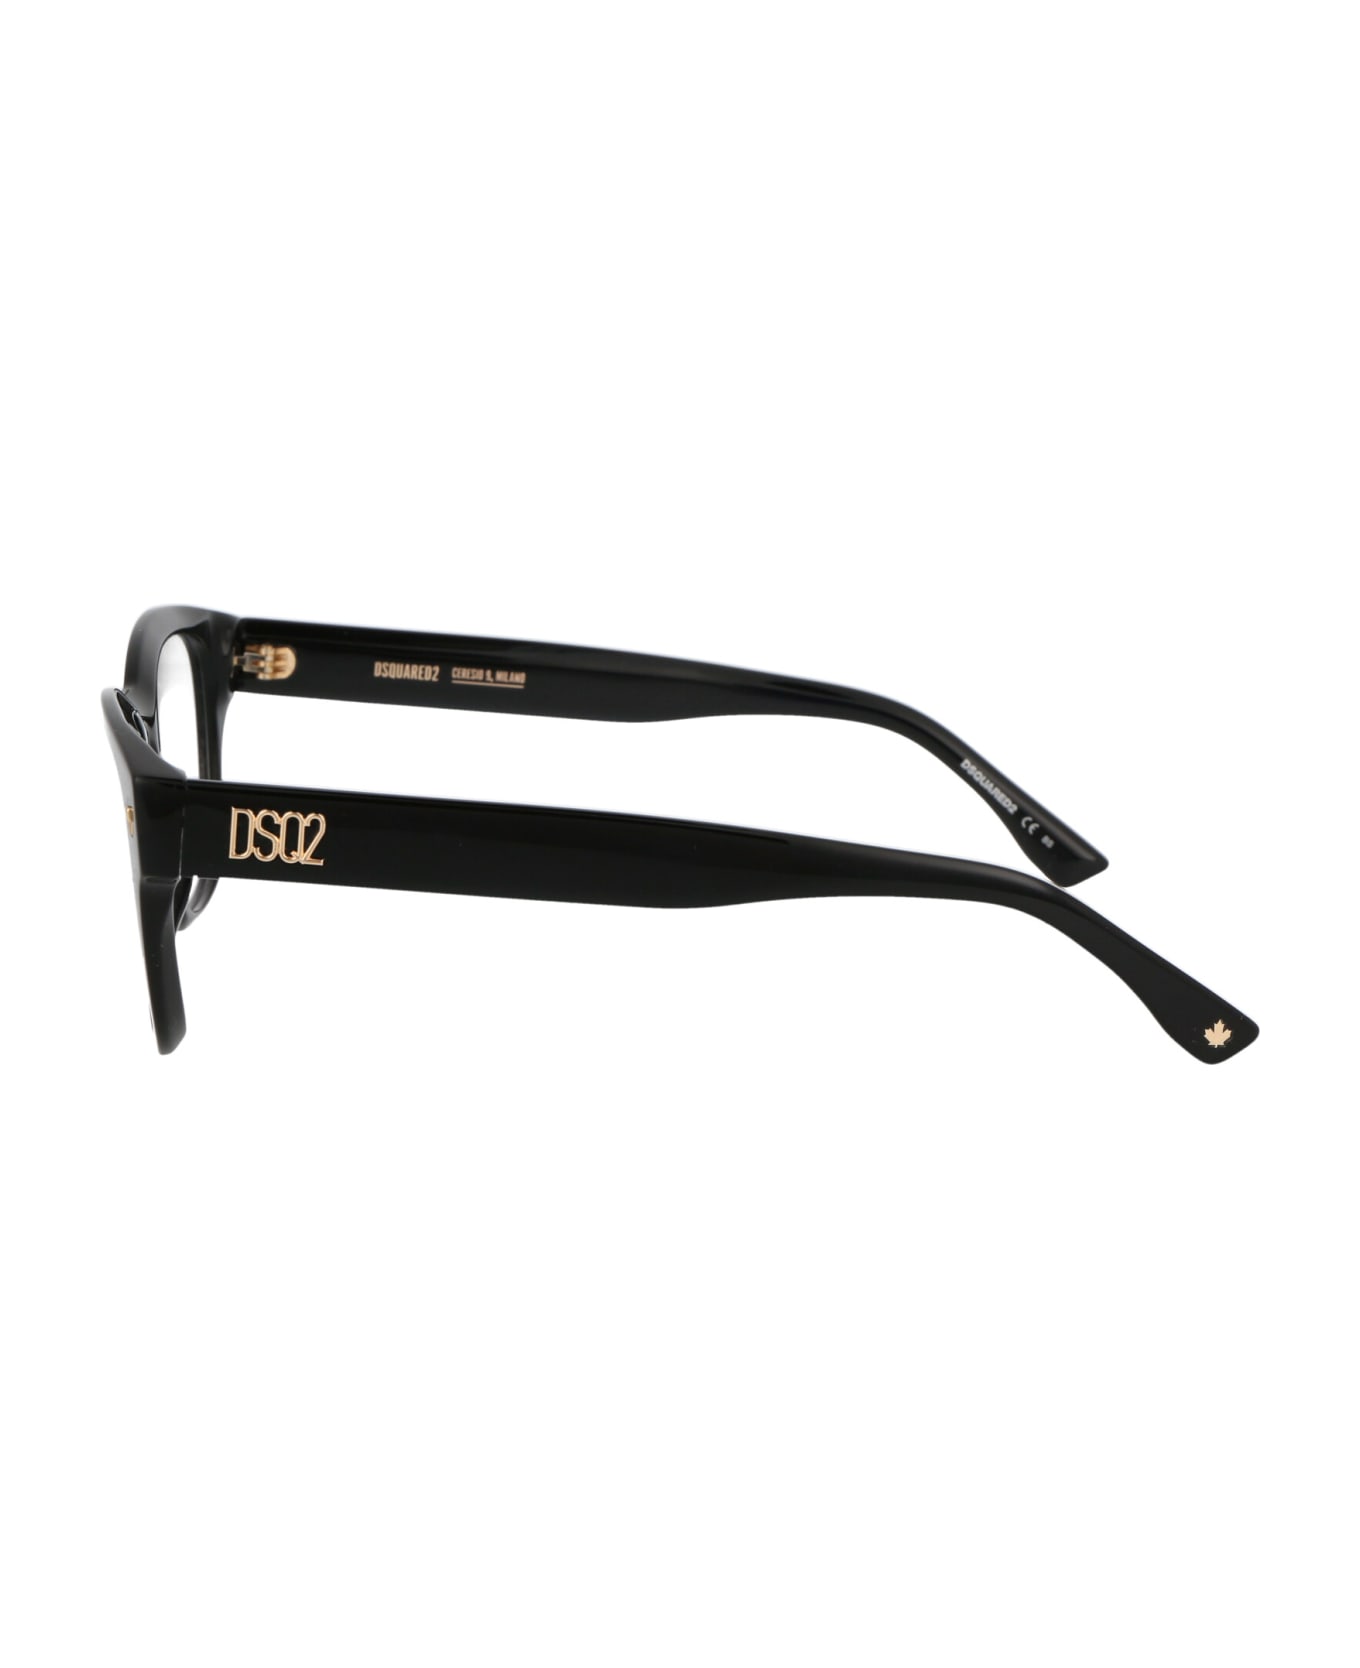 Dsquared2 Eyewear D2 0065 Glasses - 807 BLACK アイウェア